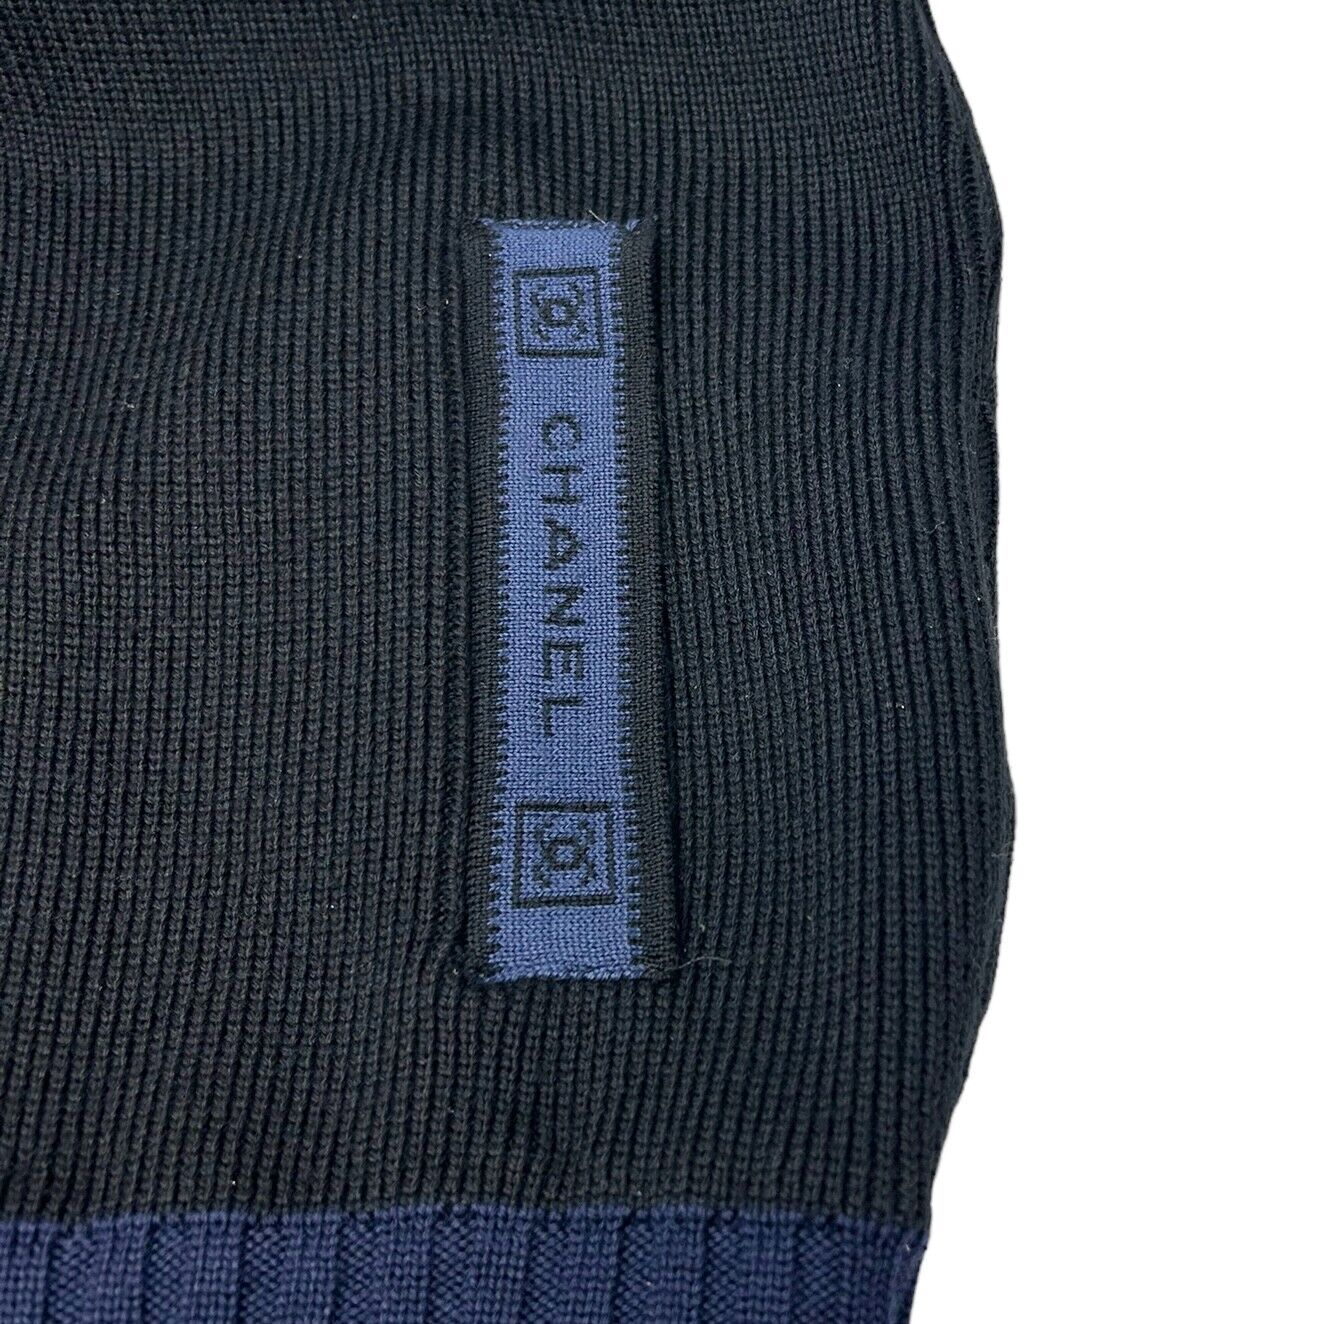 CHANEL Sport 04A Vintage Coco Mark Zipped Jacket #38 Black Navy Wool Rank AB